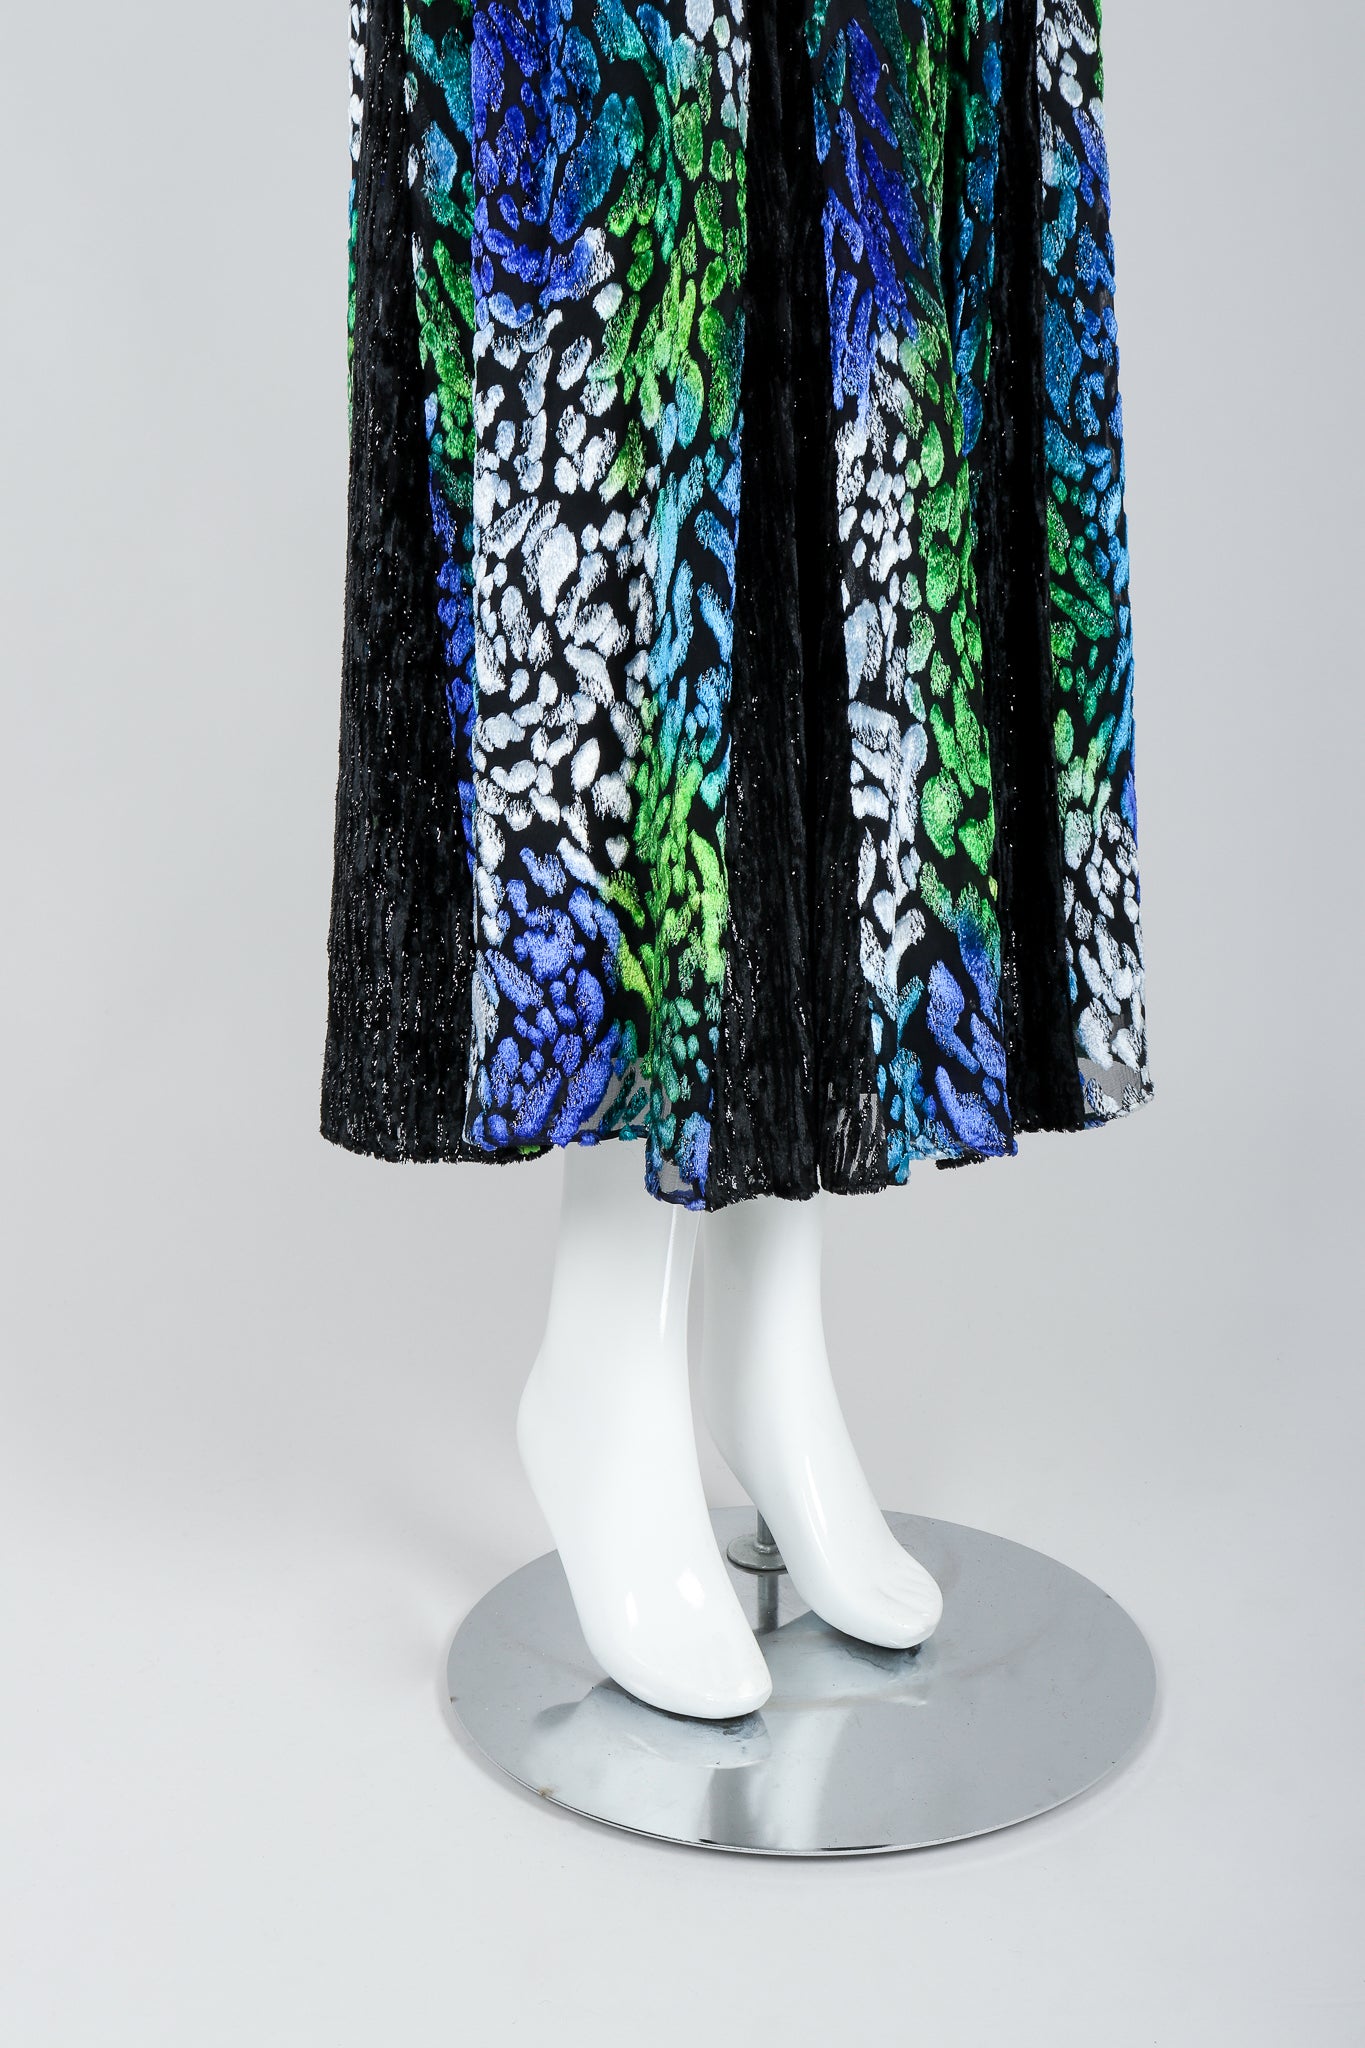 Recess Vintage Diane Freis Velvet Lamé Burnout Ombre Dress on Mannequin, godet skirt